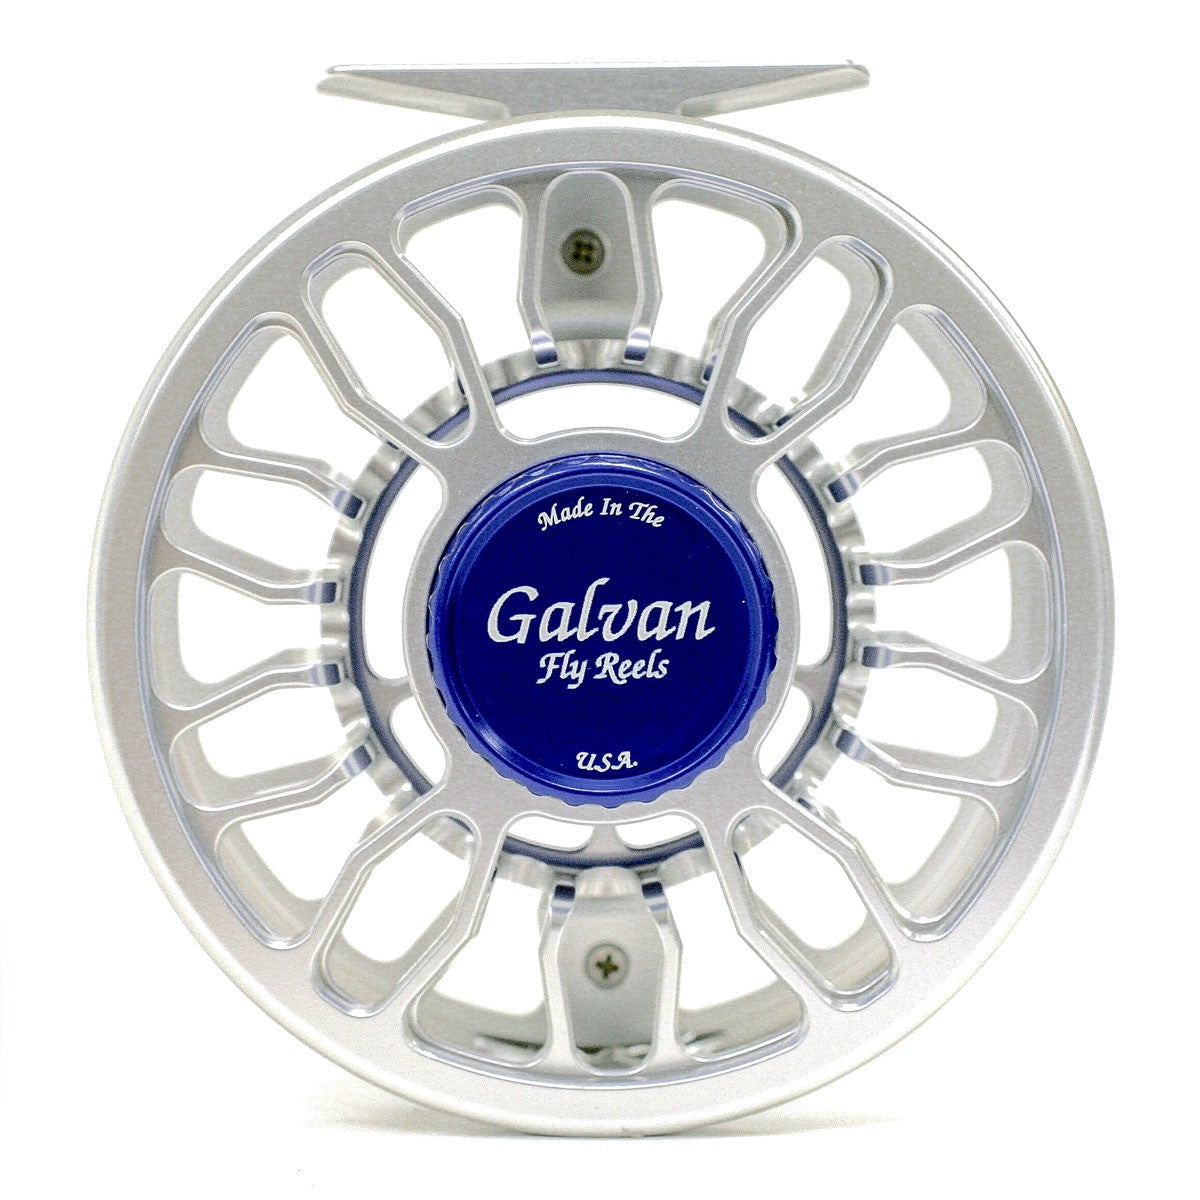 Galvan Brookie Fly Reel - The Compleat Angler